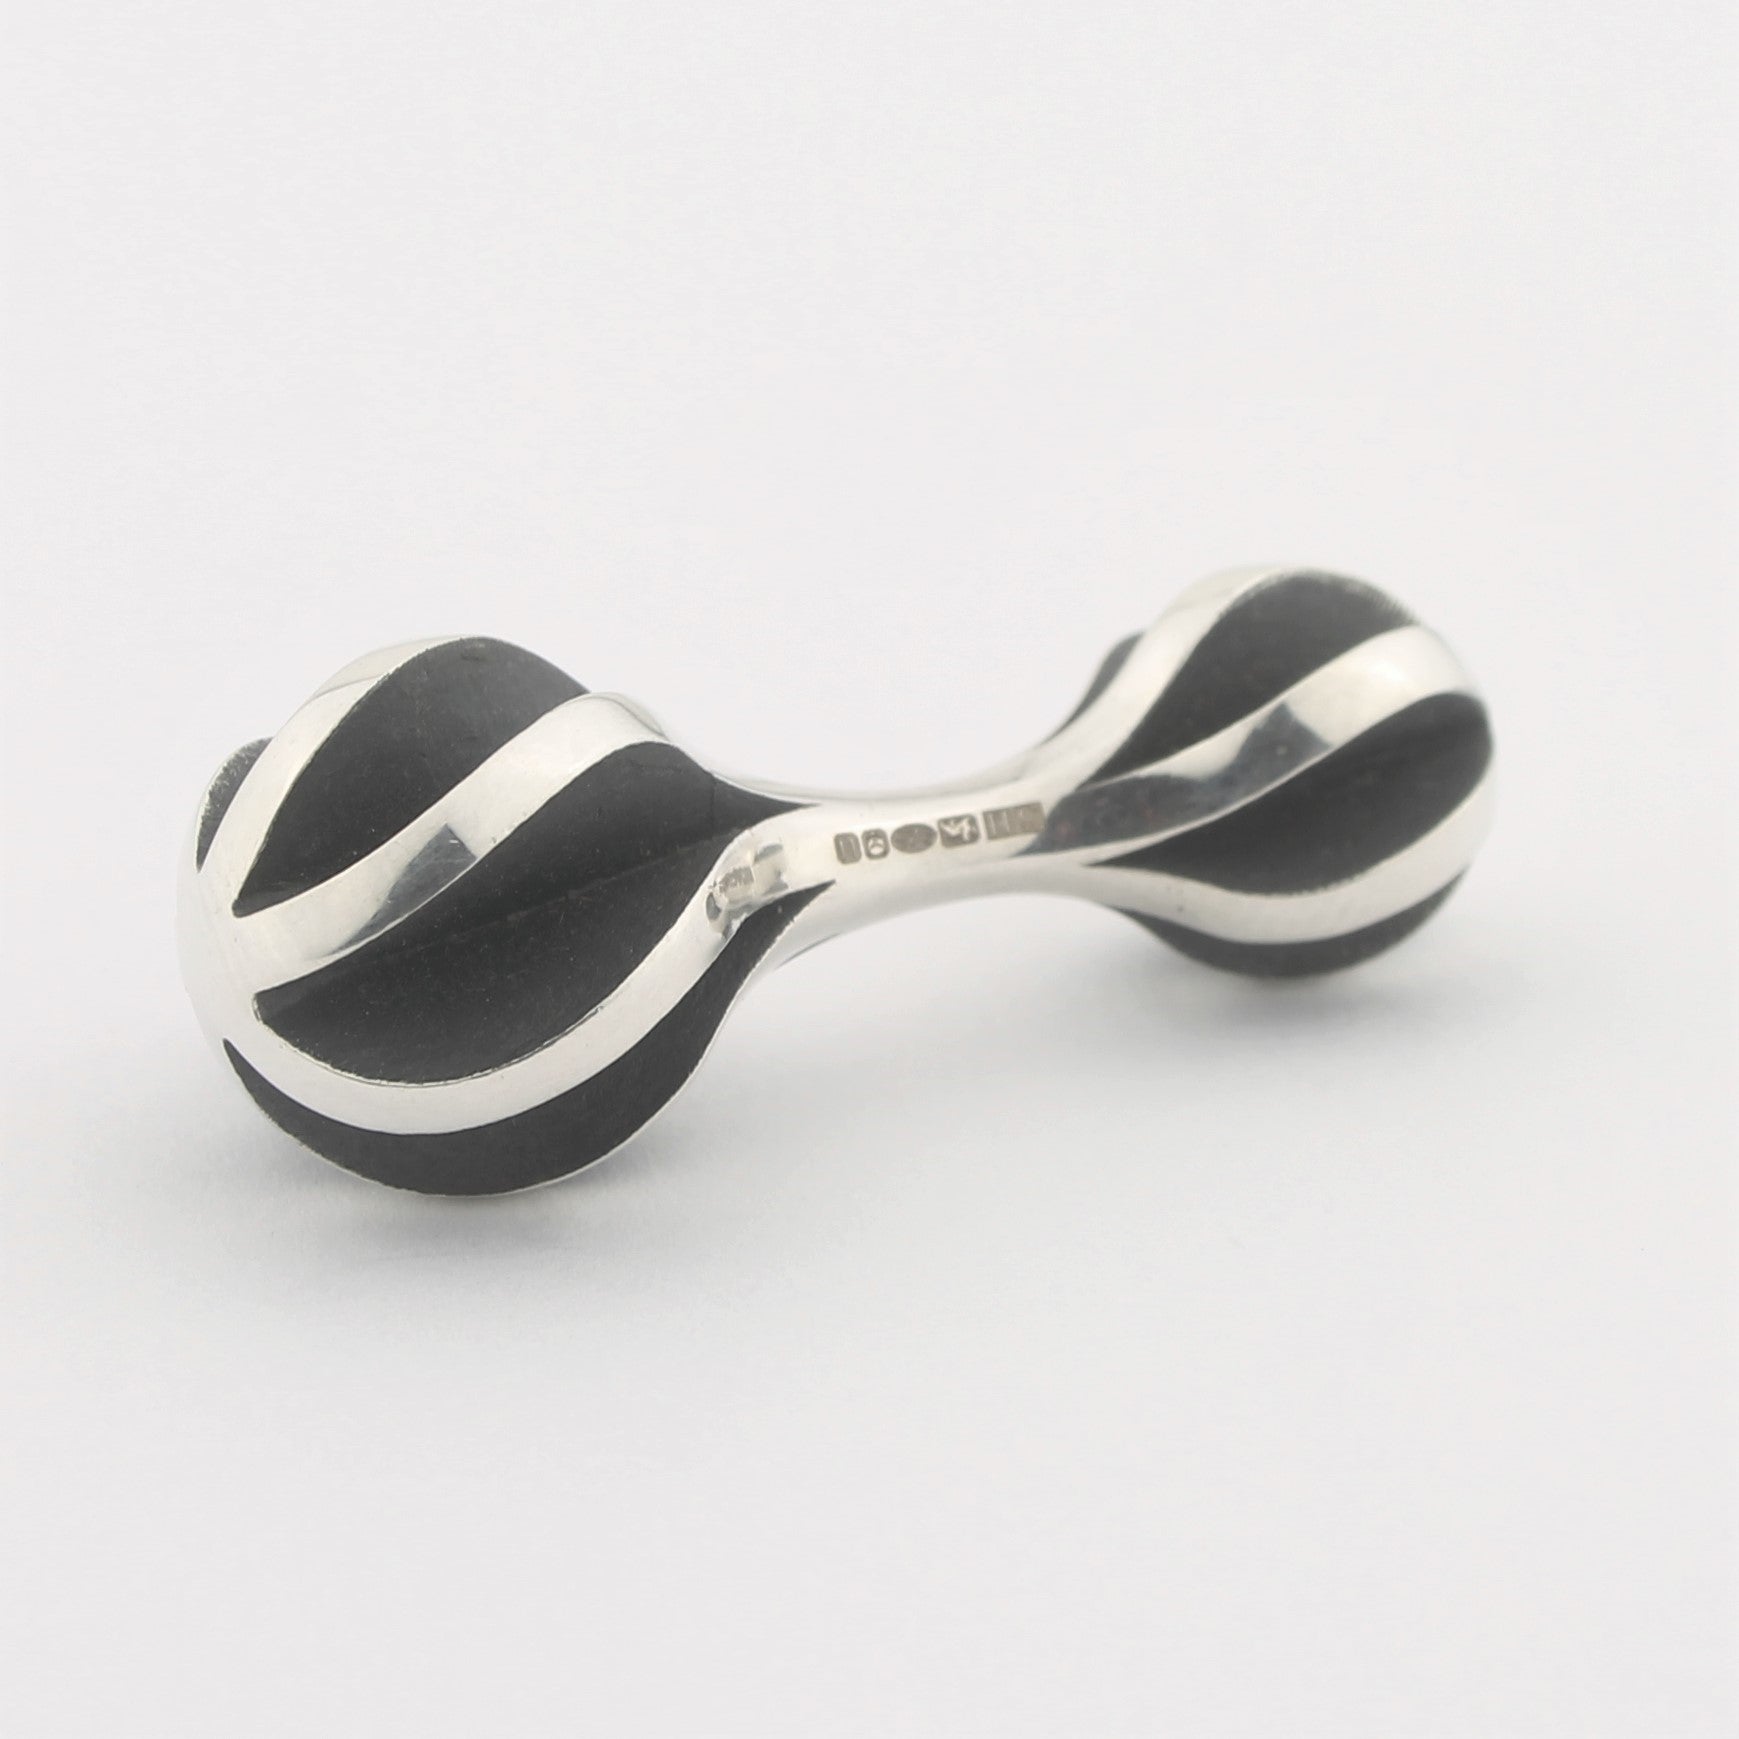 Twister design cufflinks in sterling silver